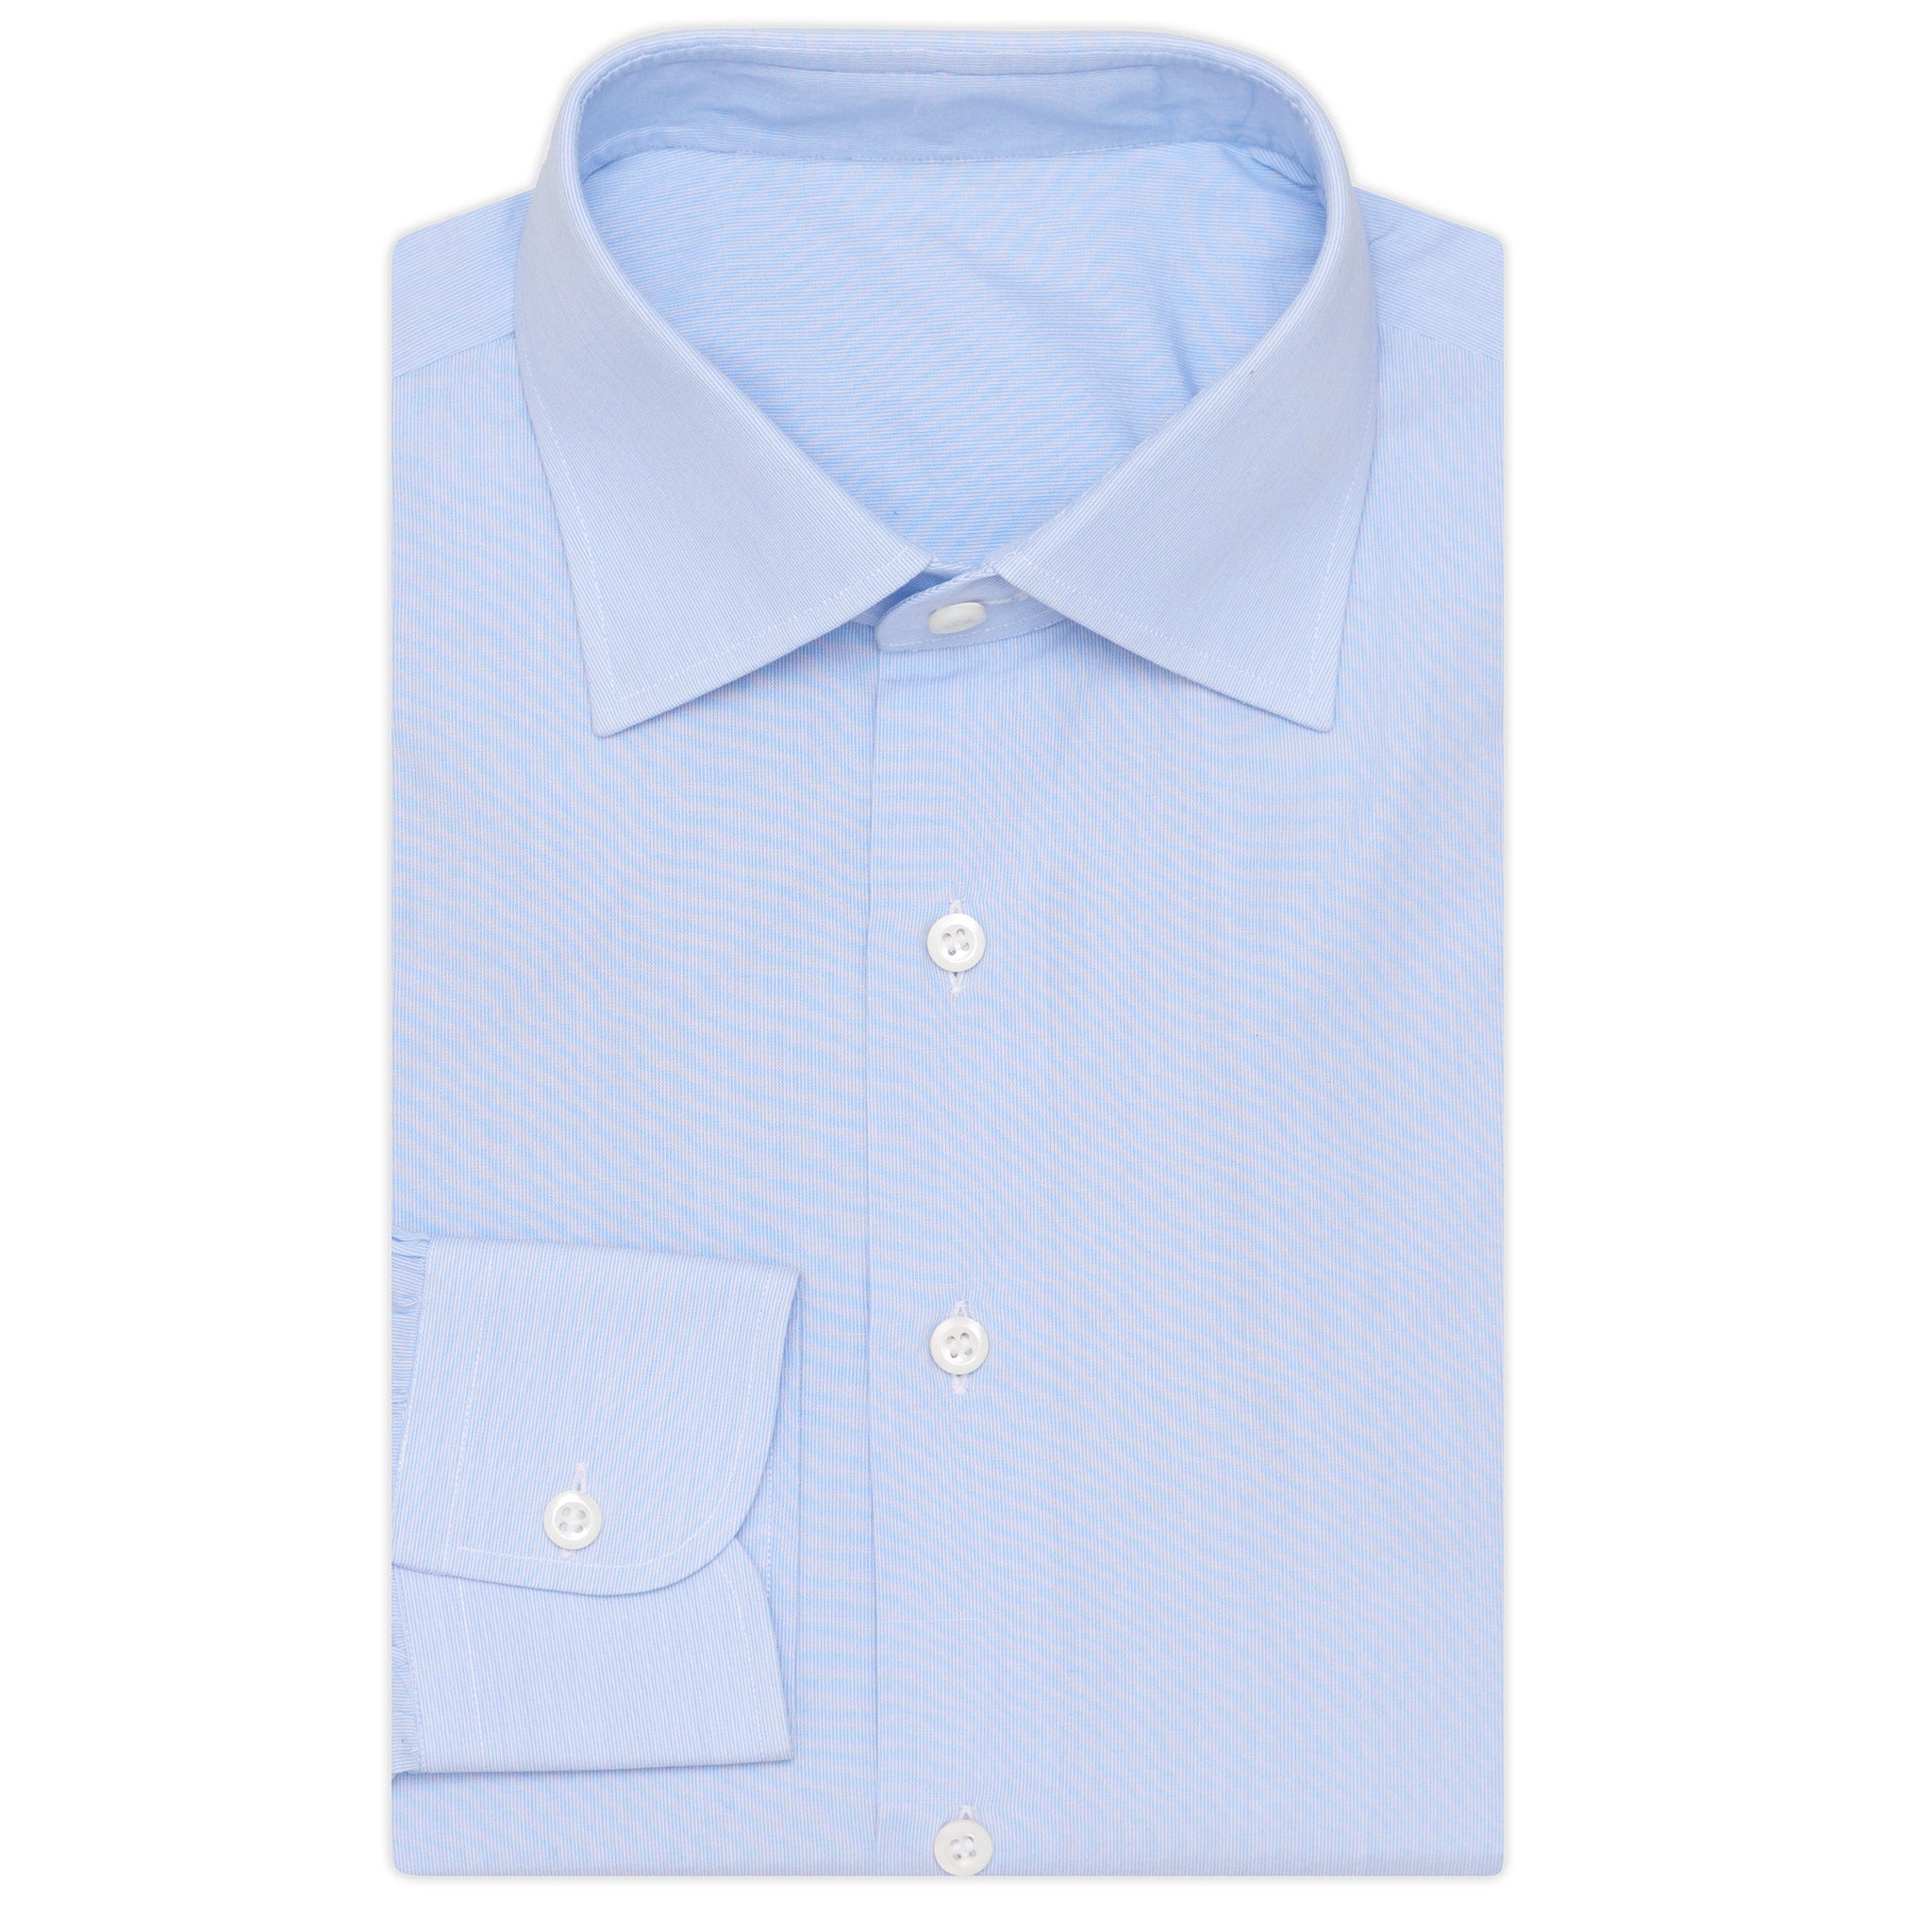 BESPOKE ATHENS Handmade Light Blue Hairline Striped Cotton Shirt NEW Slim Fit BESPOKE ATHENS